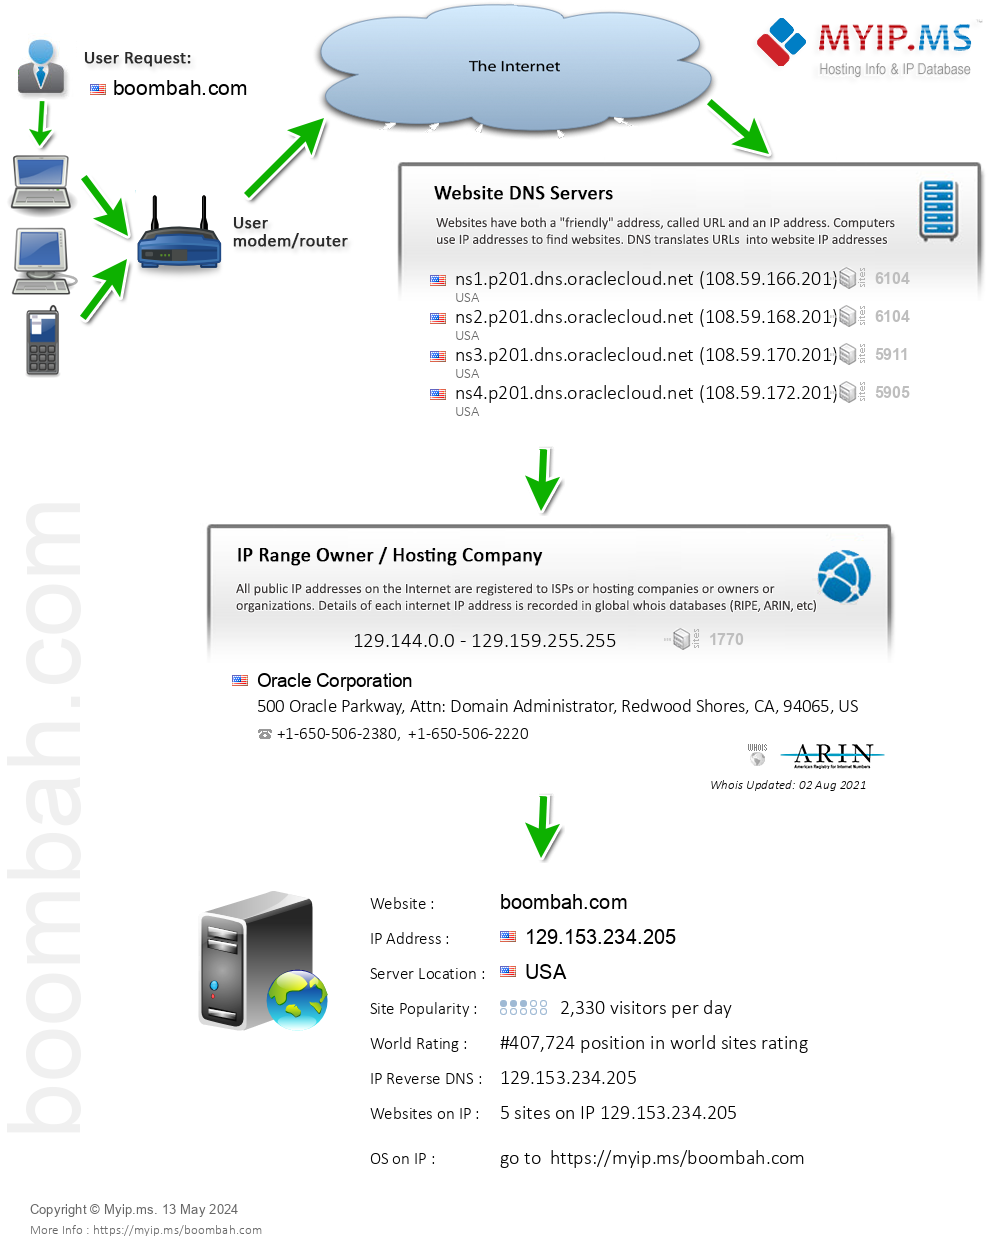 Boombah.com - Website Hosting Visual IP Diagram